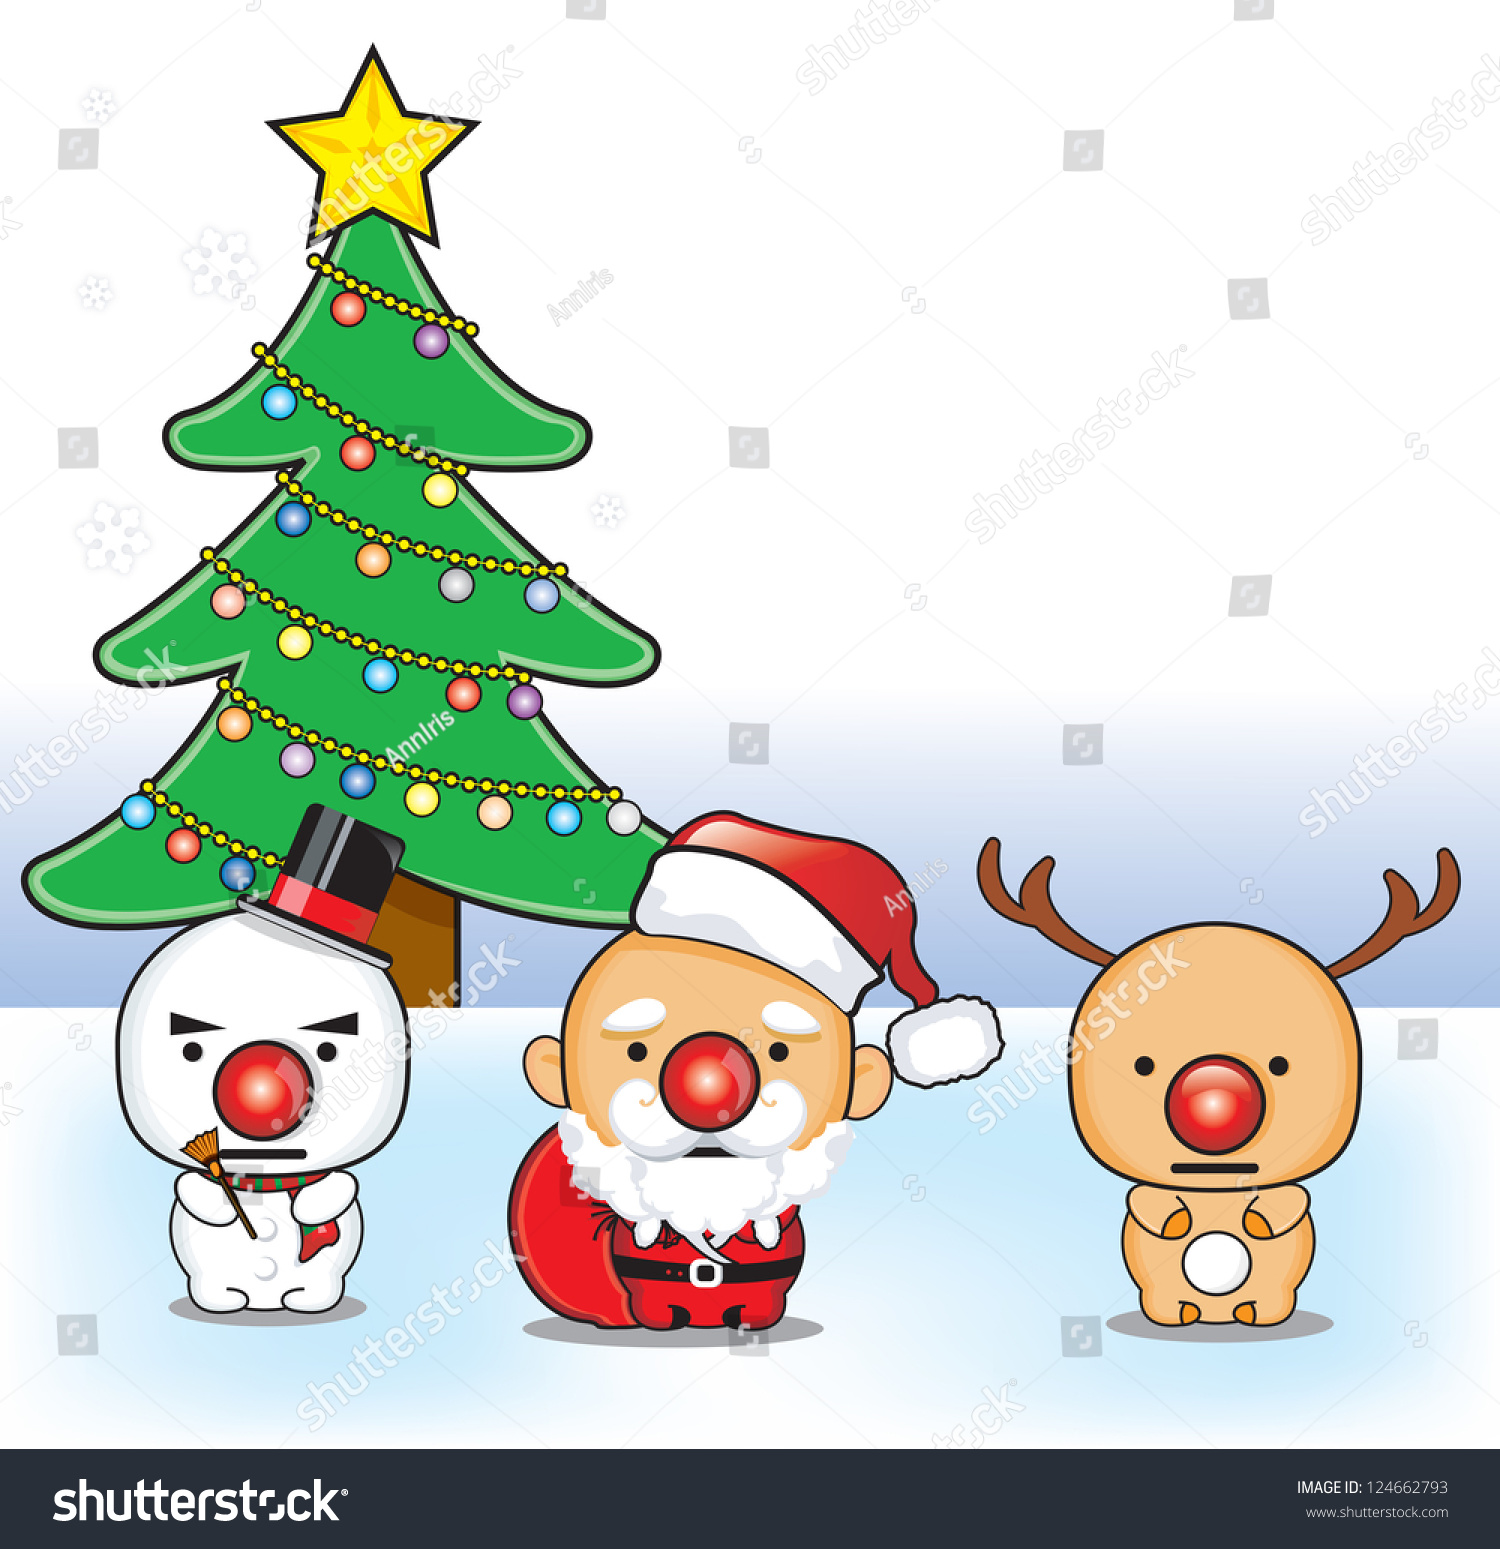 Santa Claus Reindeer Snowman On Christmas Stock Illustration ...